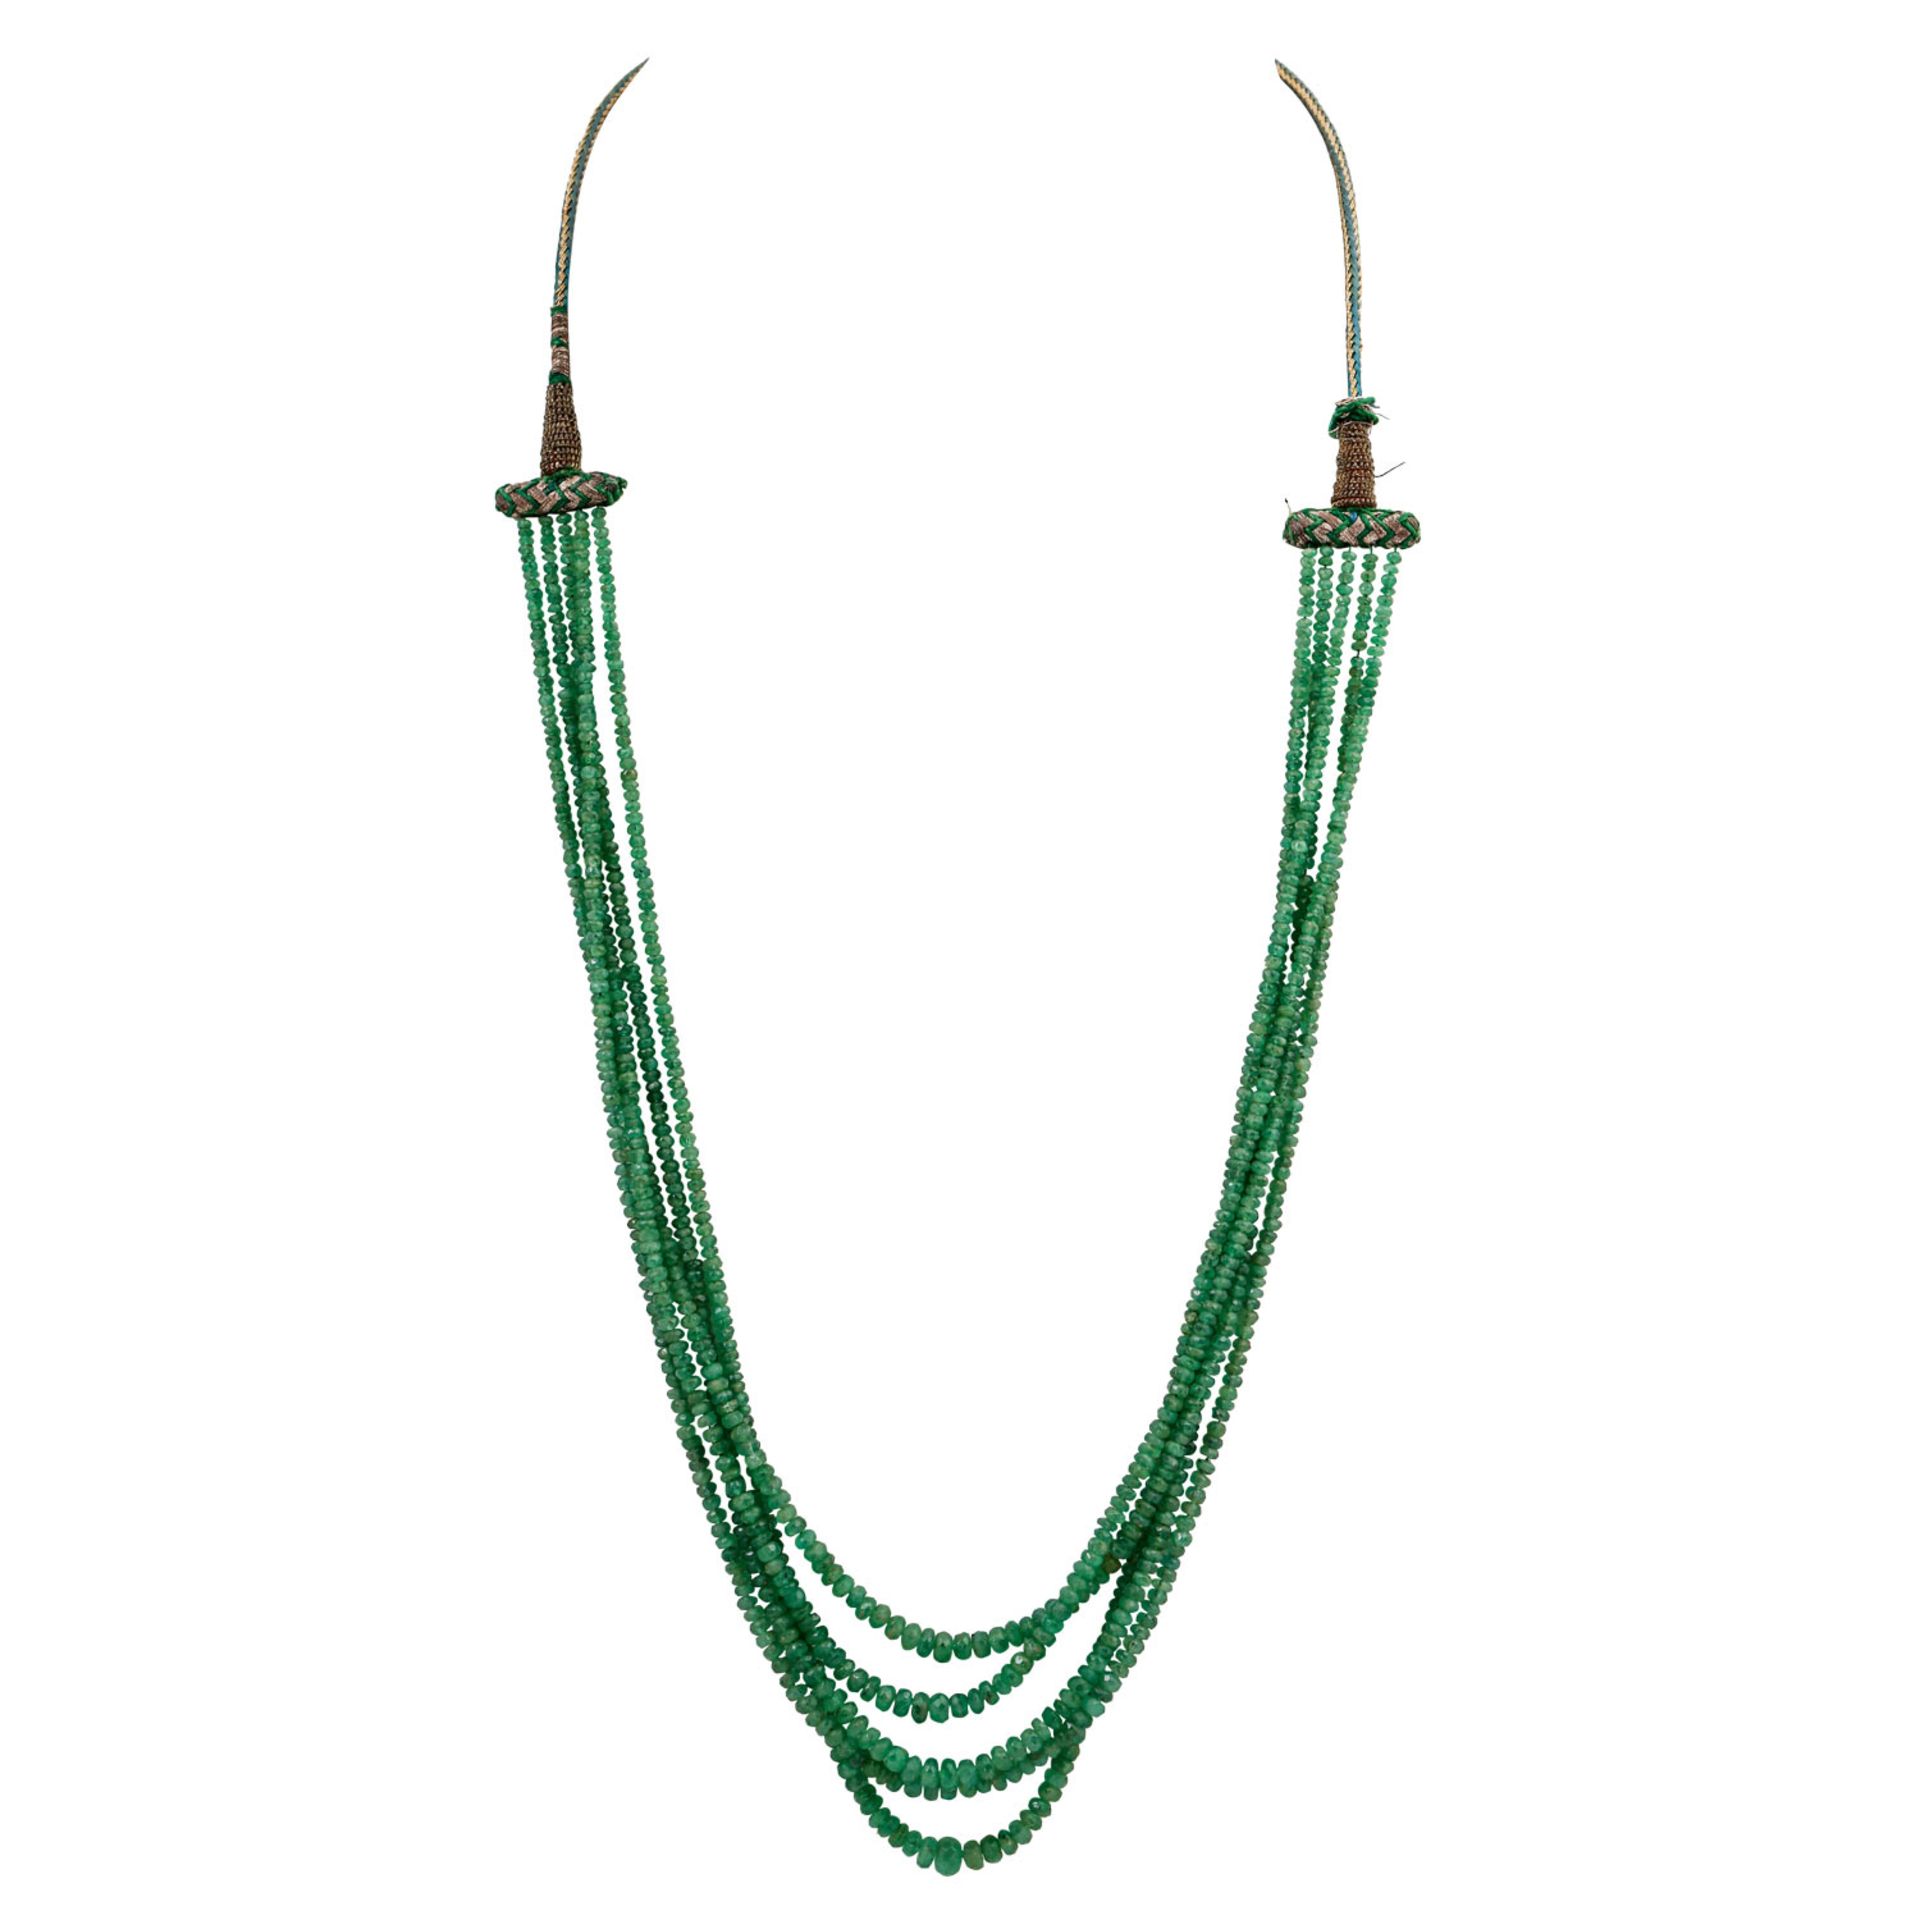 5-reihige Smaragdkette, facettierte Linsen ca. 2,5-6 mm im Verlauf, tansparent bis tra